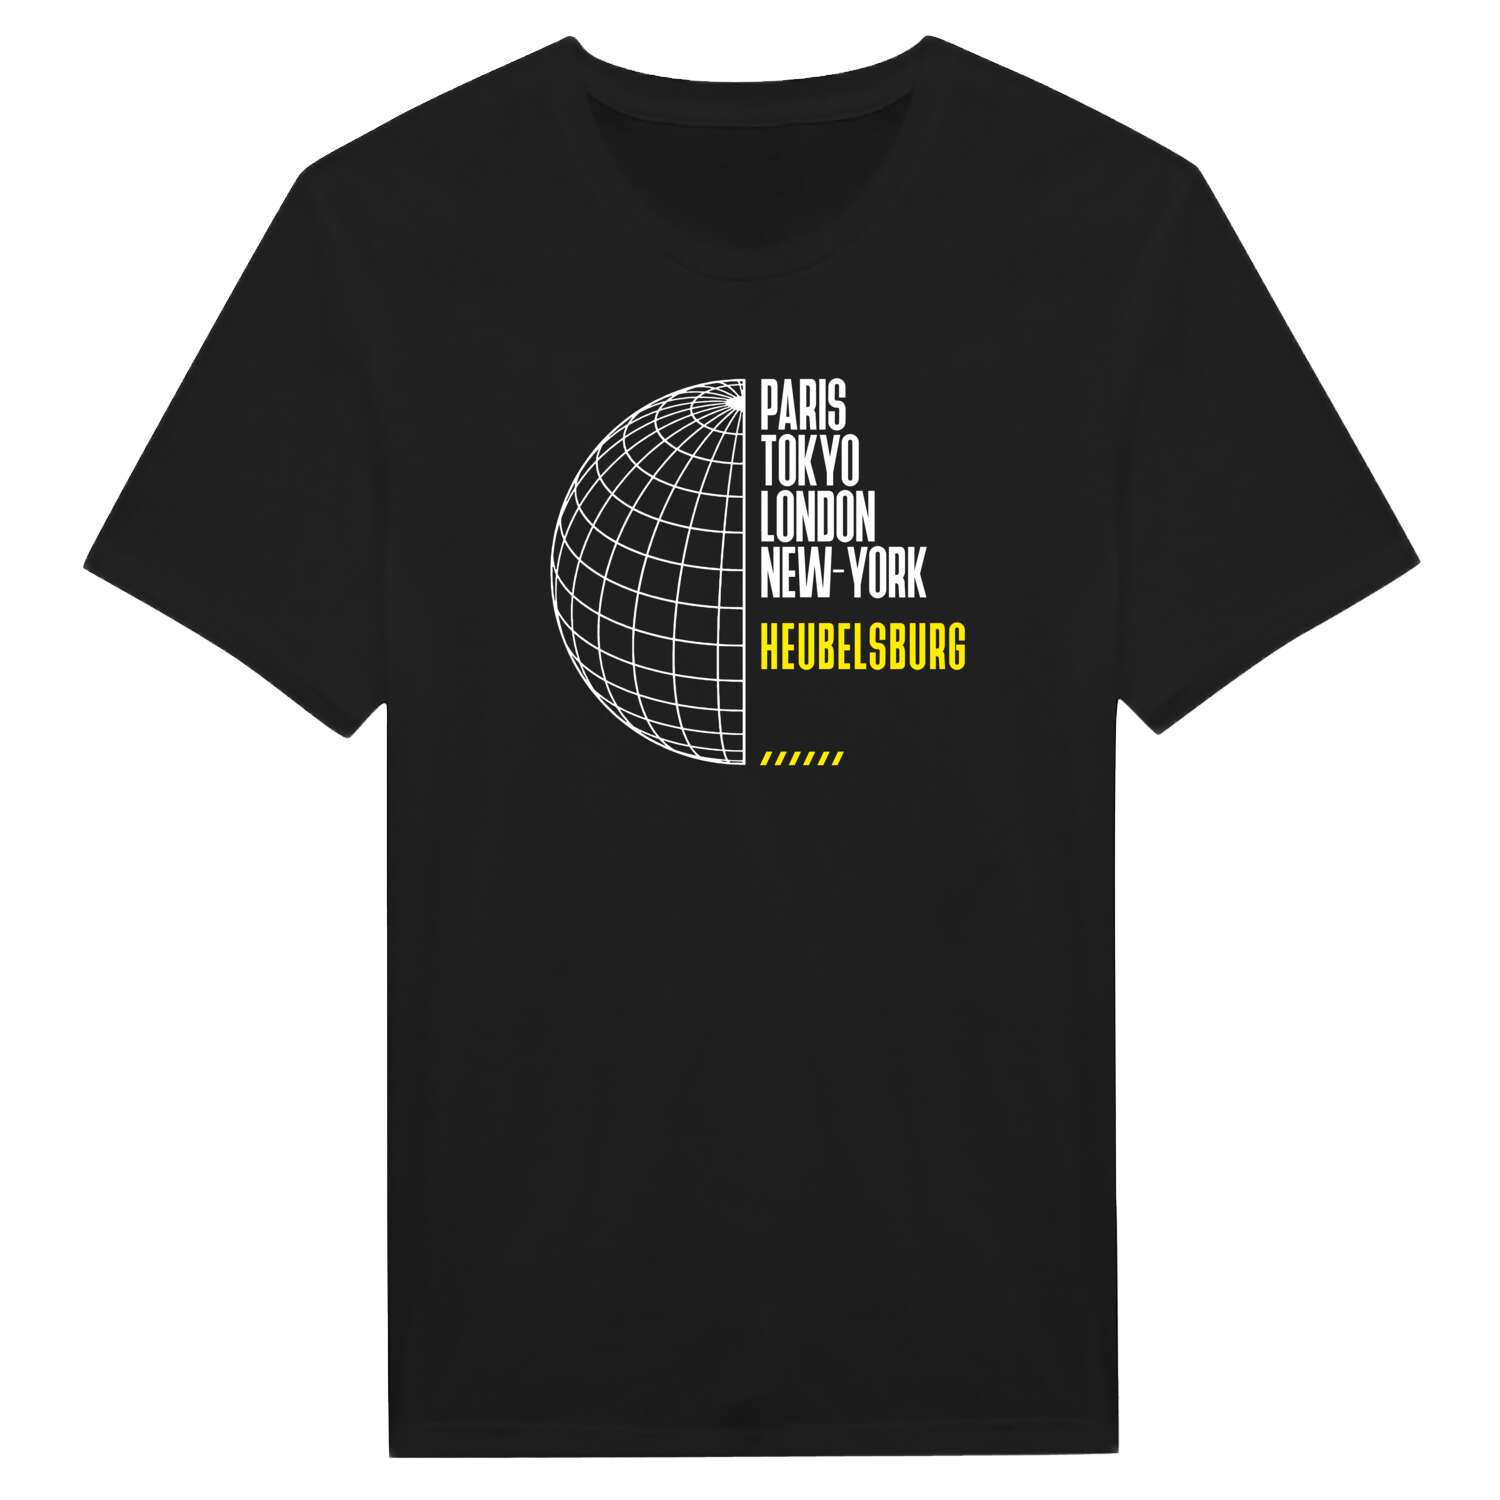 Heubelsburg T-Shirt »Paris Tokyo London«